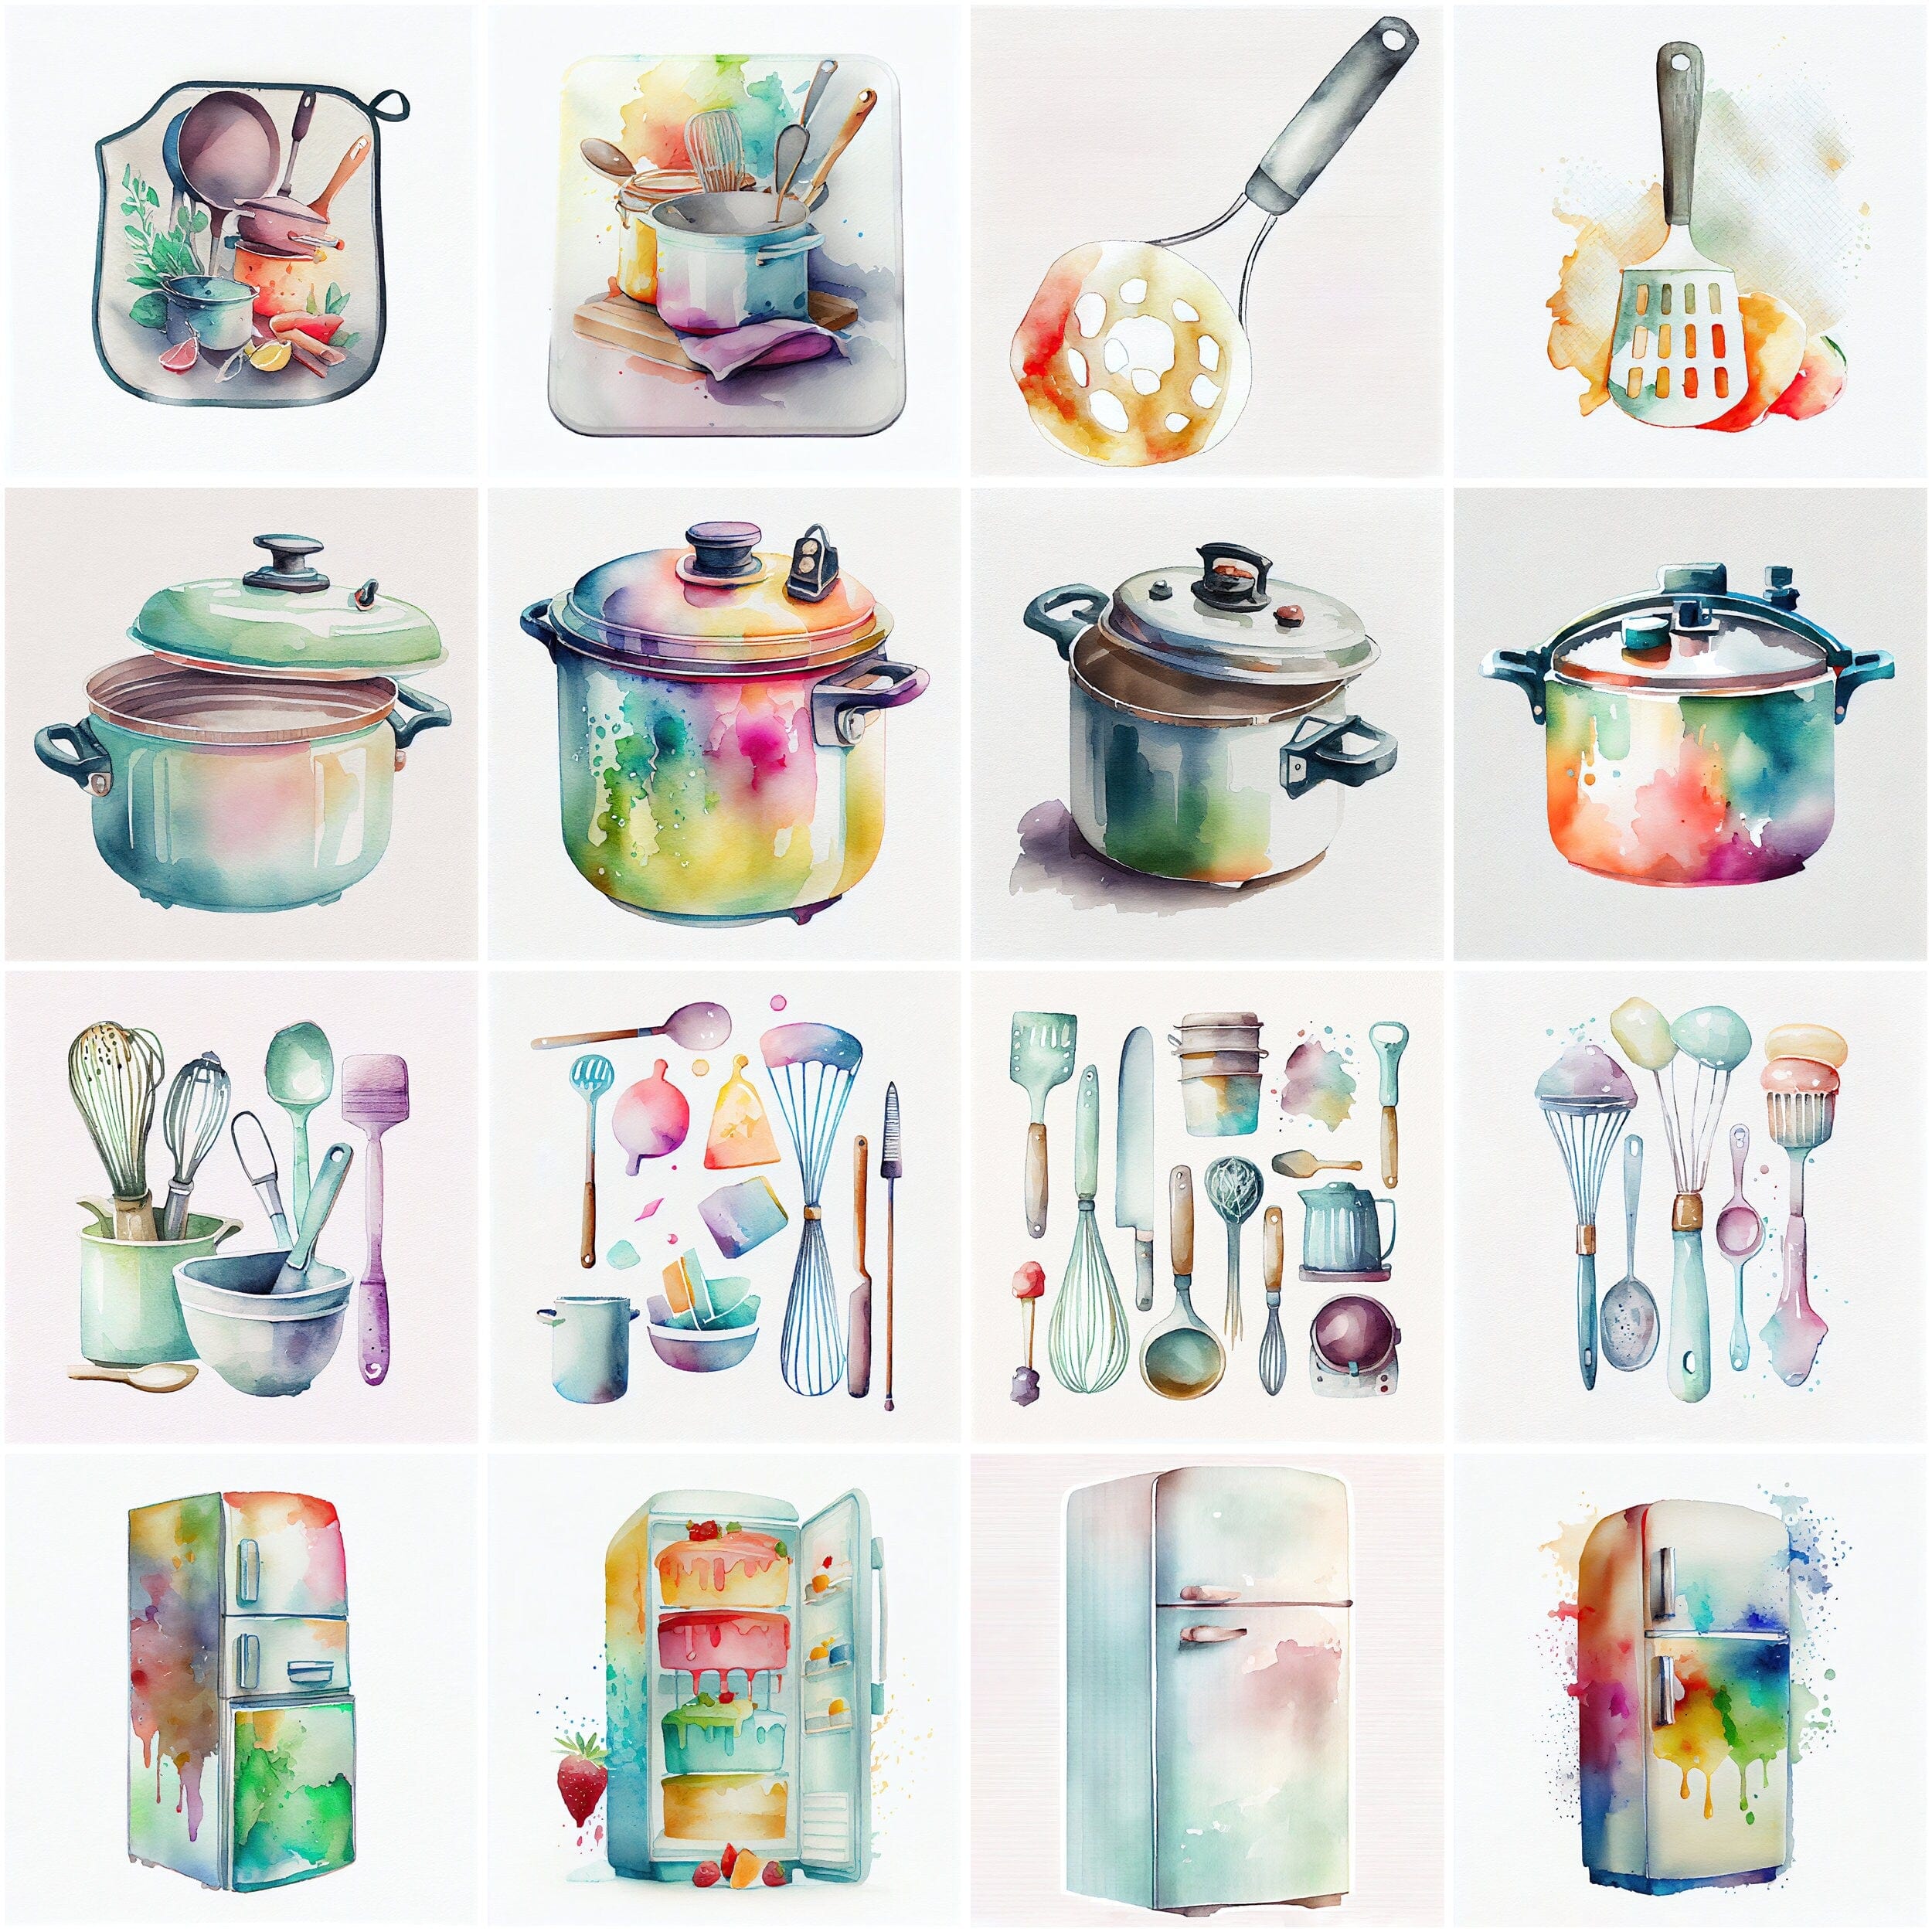 Kitchen Watercolor Appliance Bundle Clipart: 130 High-Quality Images for Your Home Decor Projects, Kitchen sublimation clipart Digital Download Sumobundle